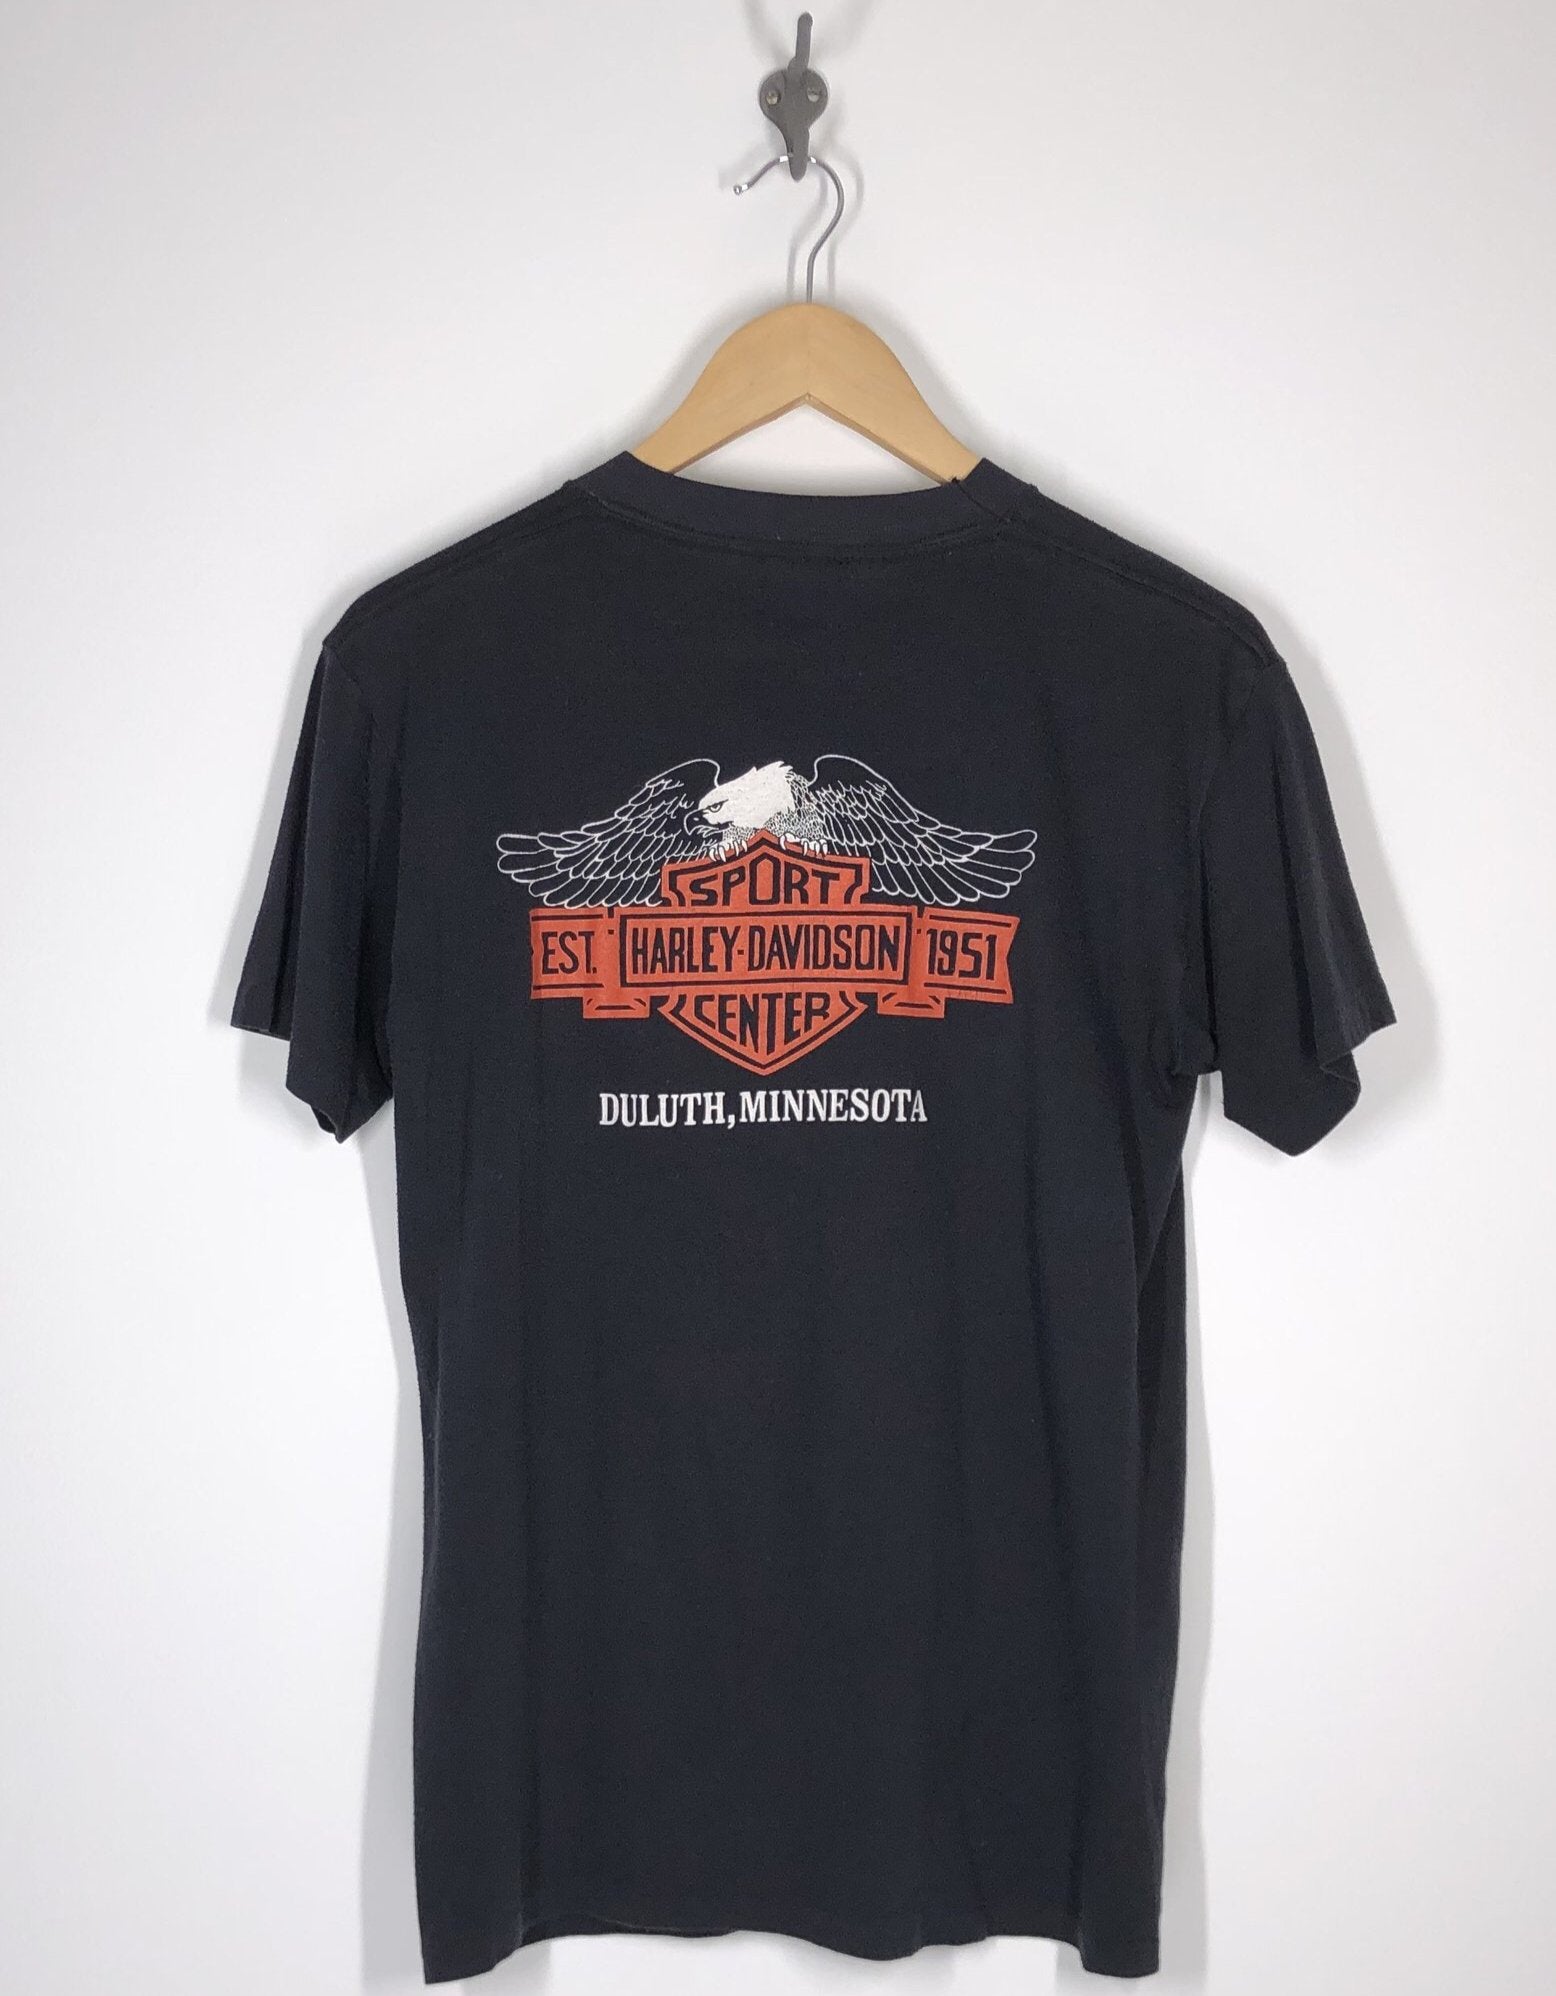 Harley Davidson Motorcycles T Shirt - 3D Emblem - American Legend - Duluth, MN 1985 - L